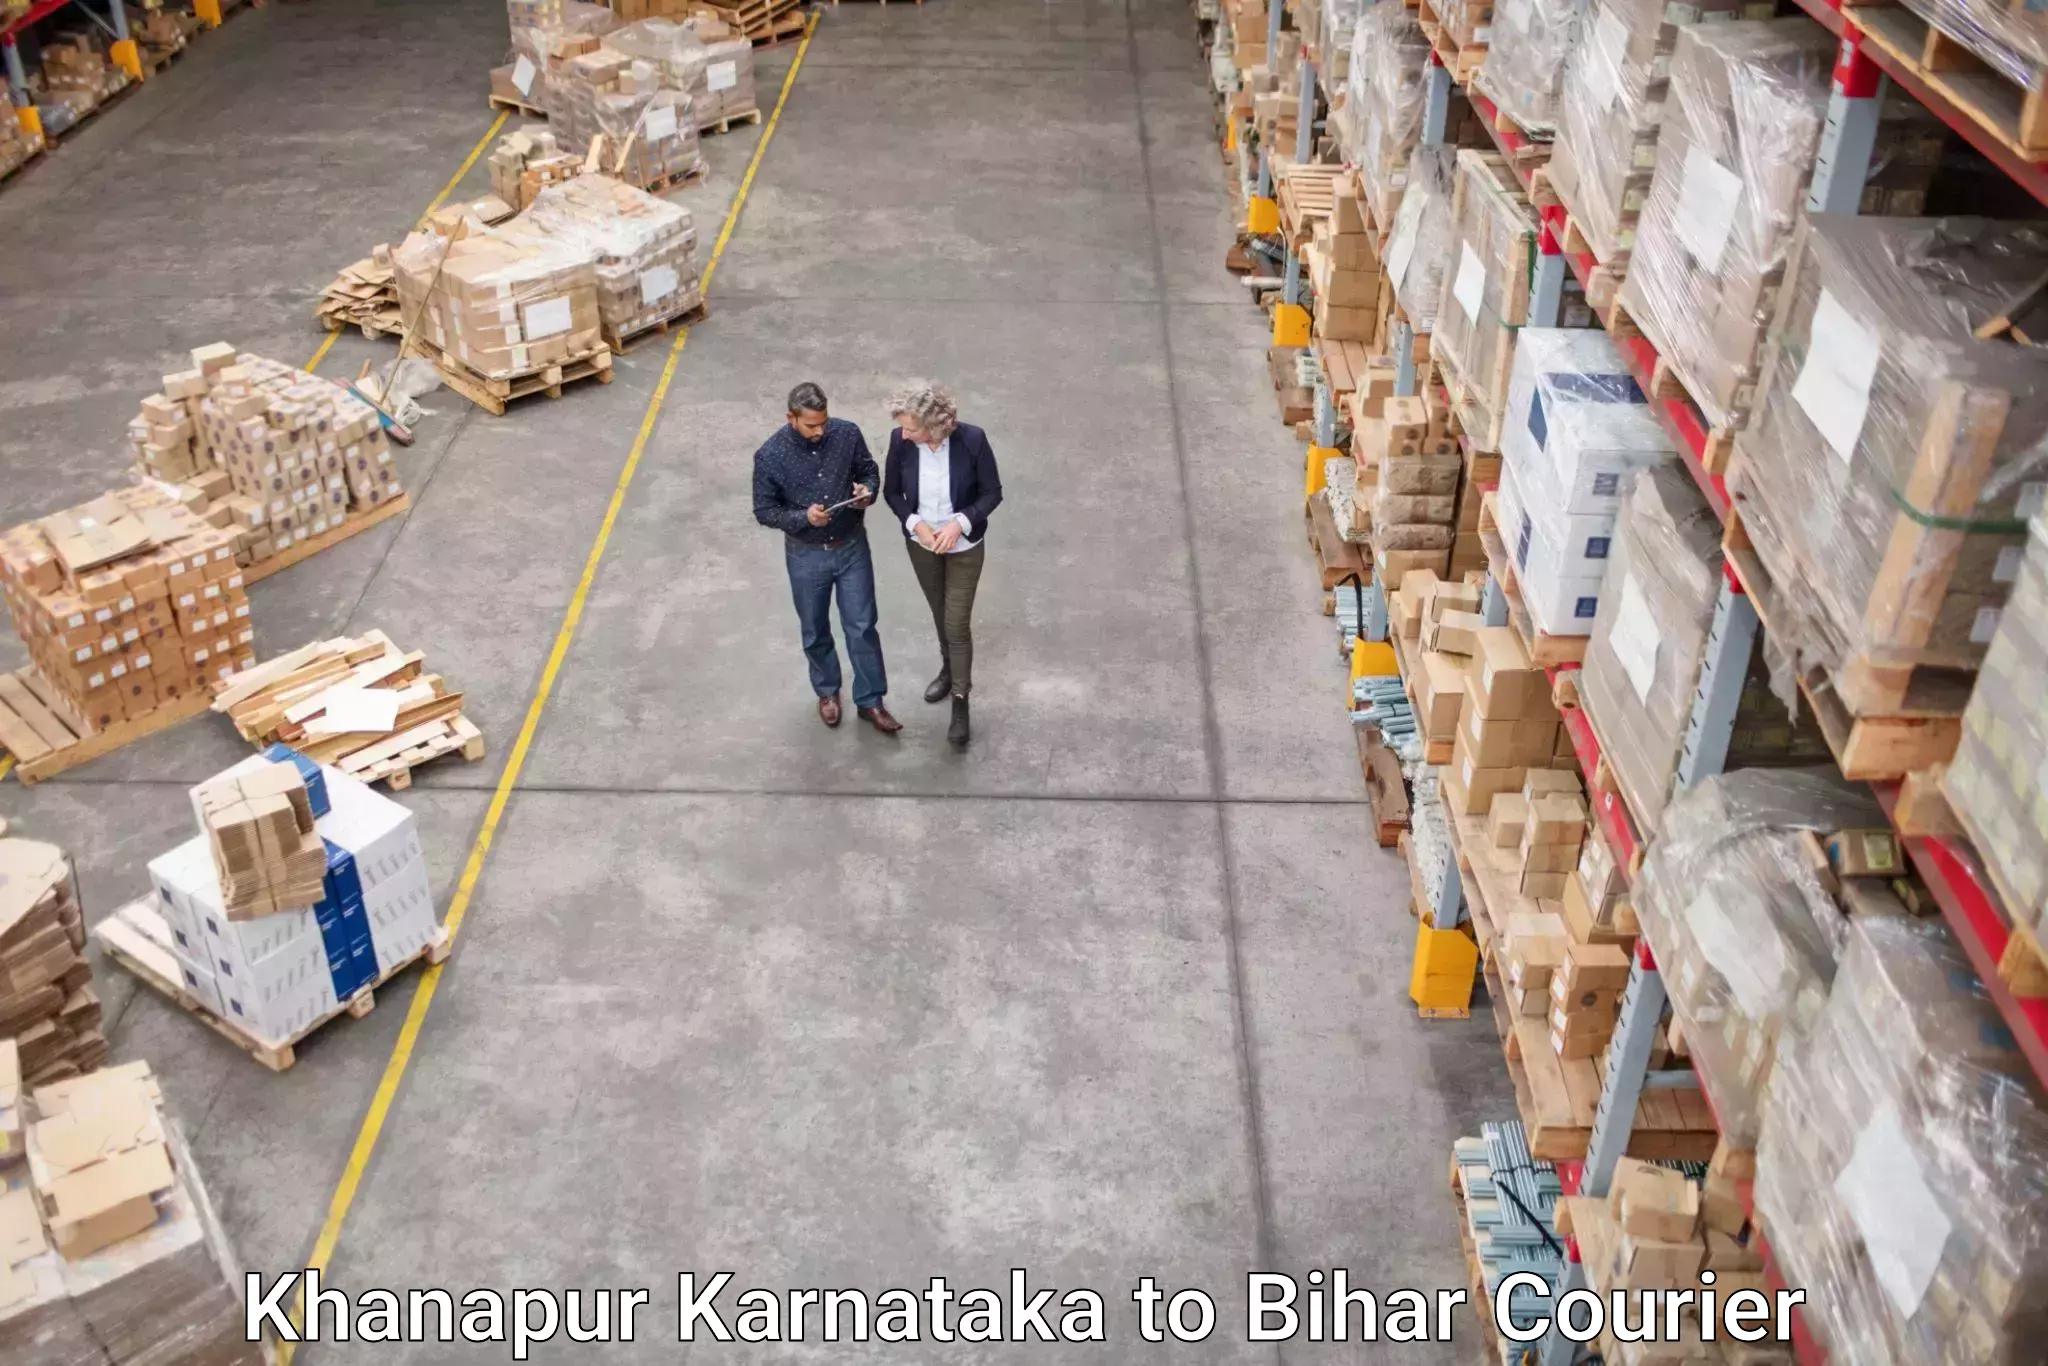 Global parcel delivery Khanapur Karnataka to Dinara